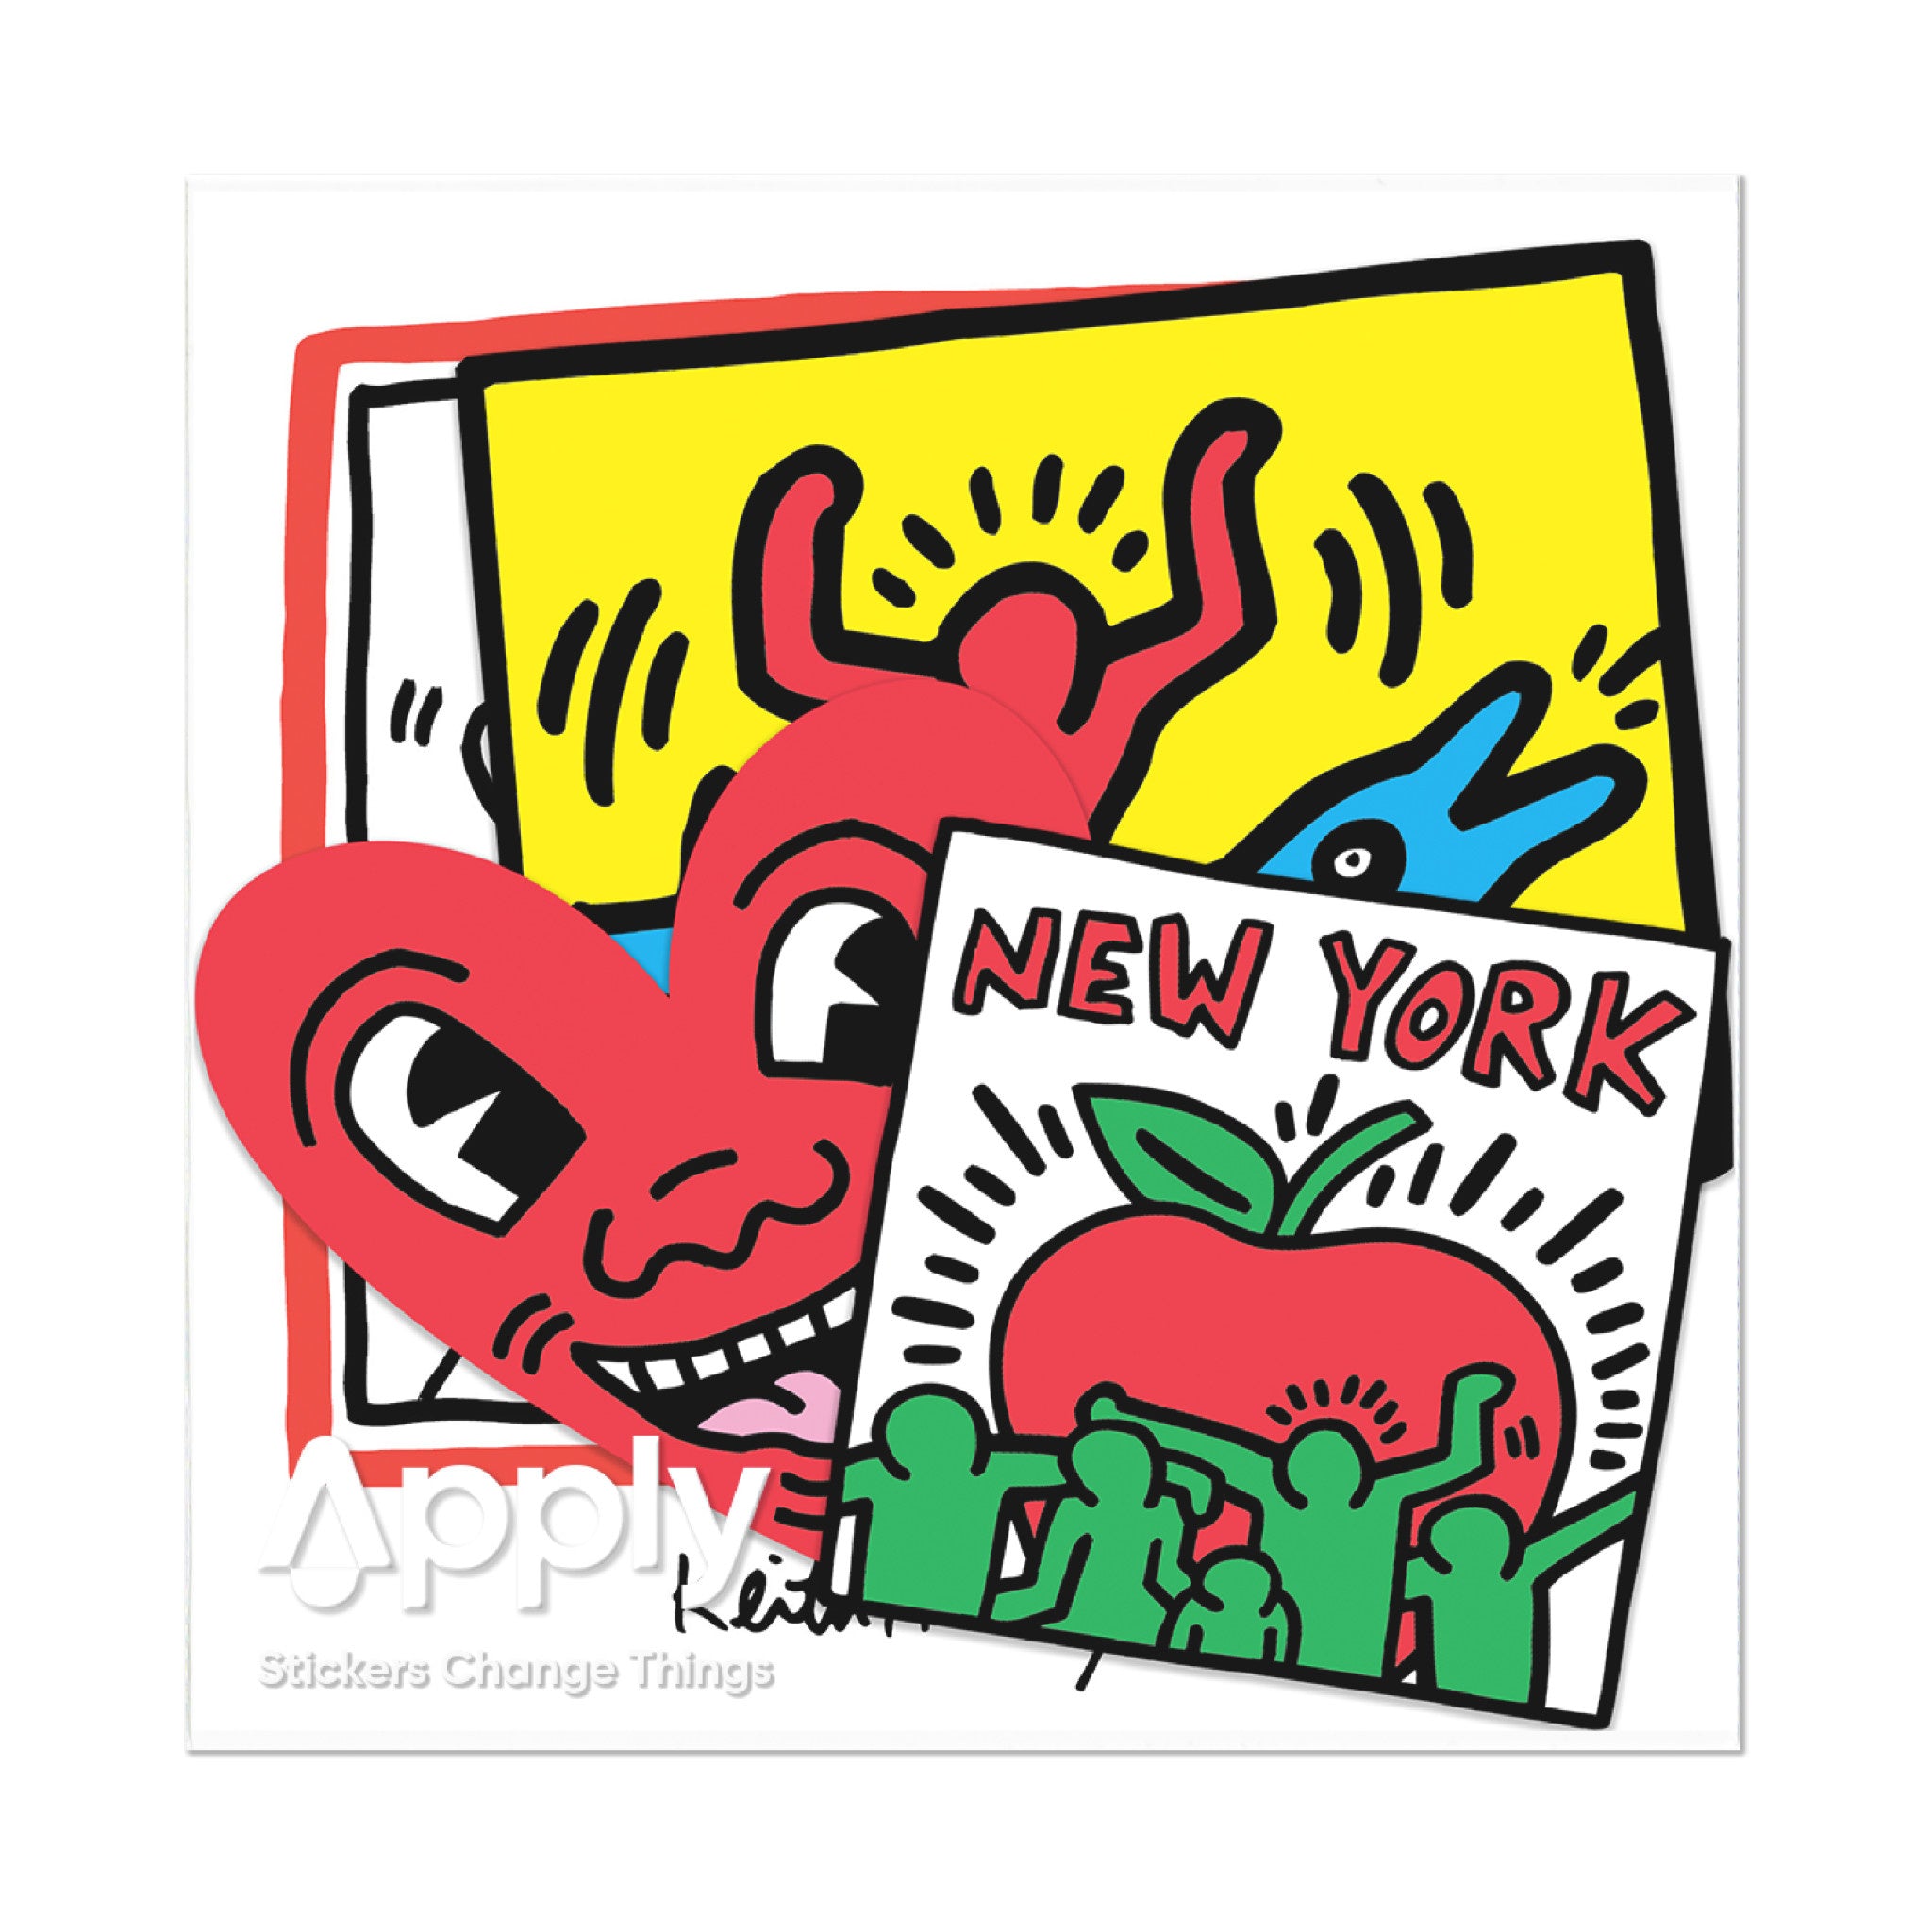 Keith Haring Graffiti Art Stickers Wholesale sticker supplier 